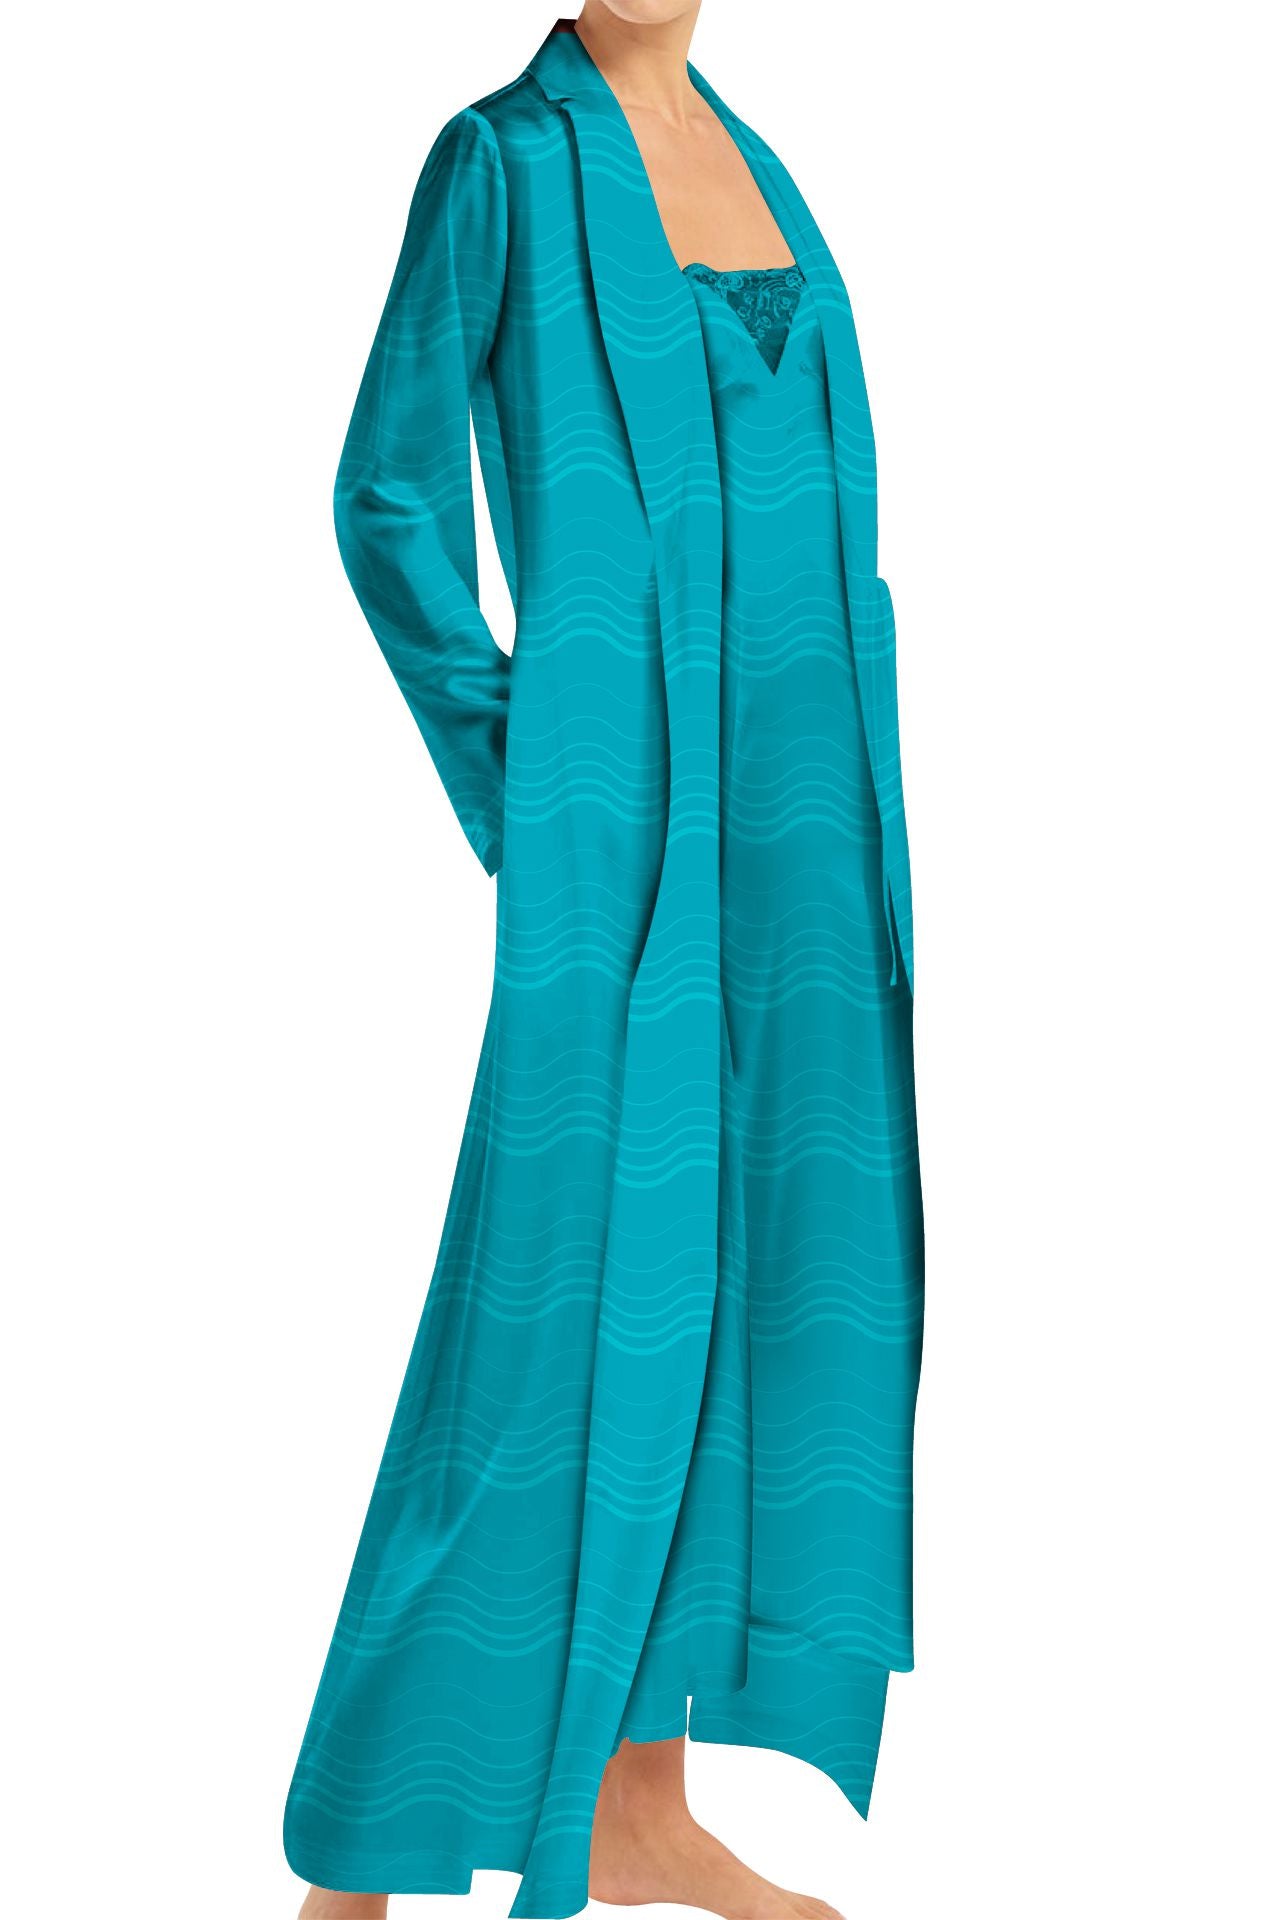 "Kyle X Shahida" "wrap maxi dress blue" "wrap dress maxi long sleeve" "wrap dress evening"